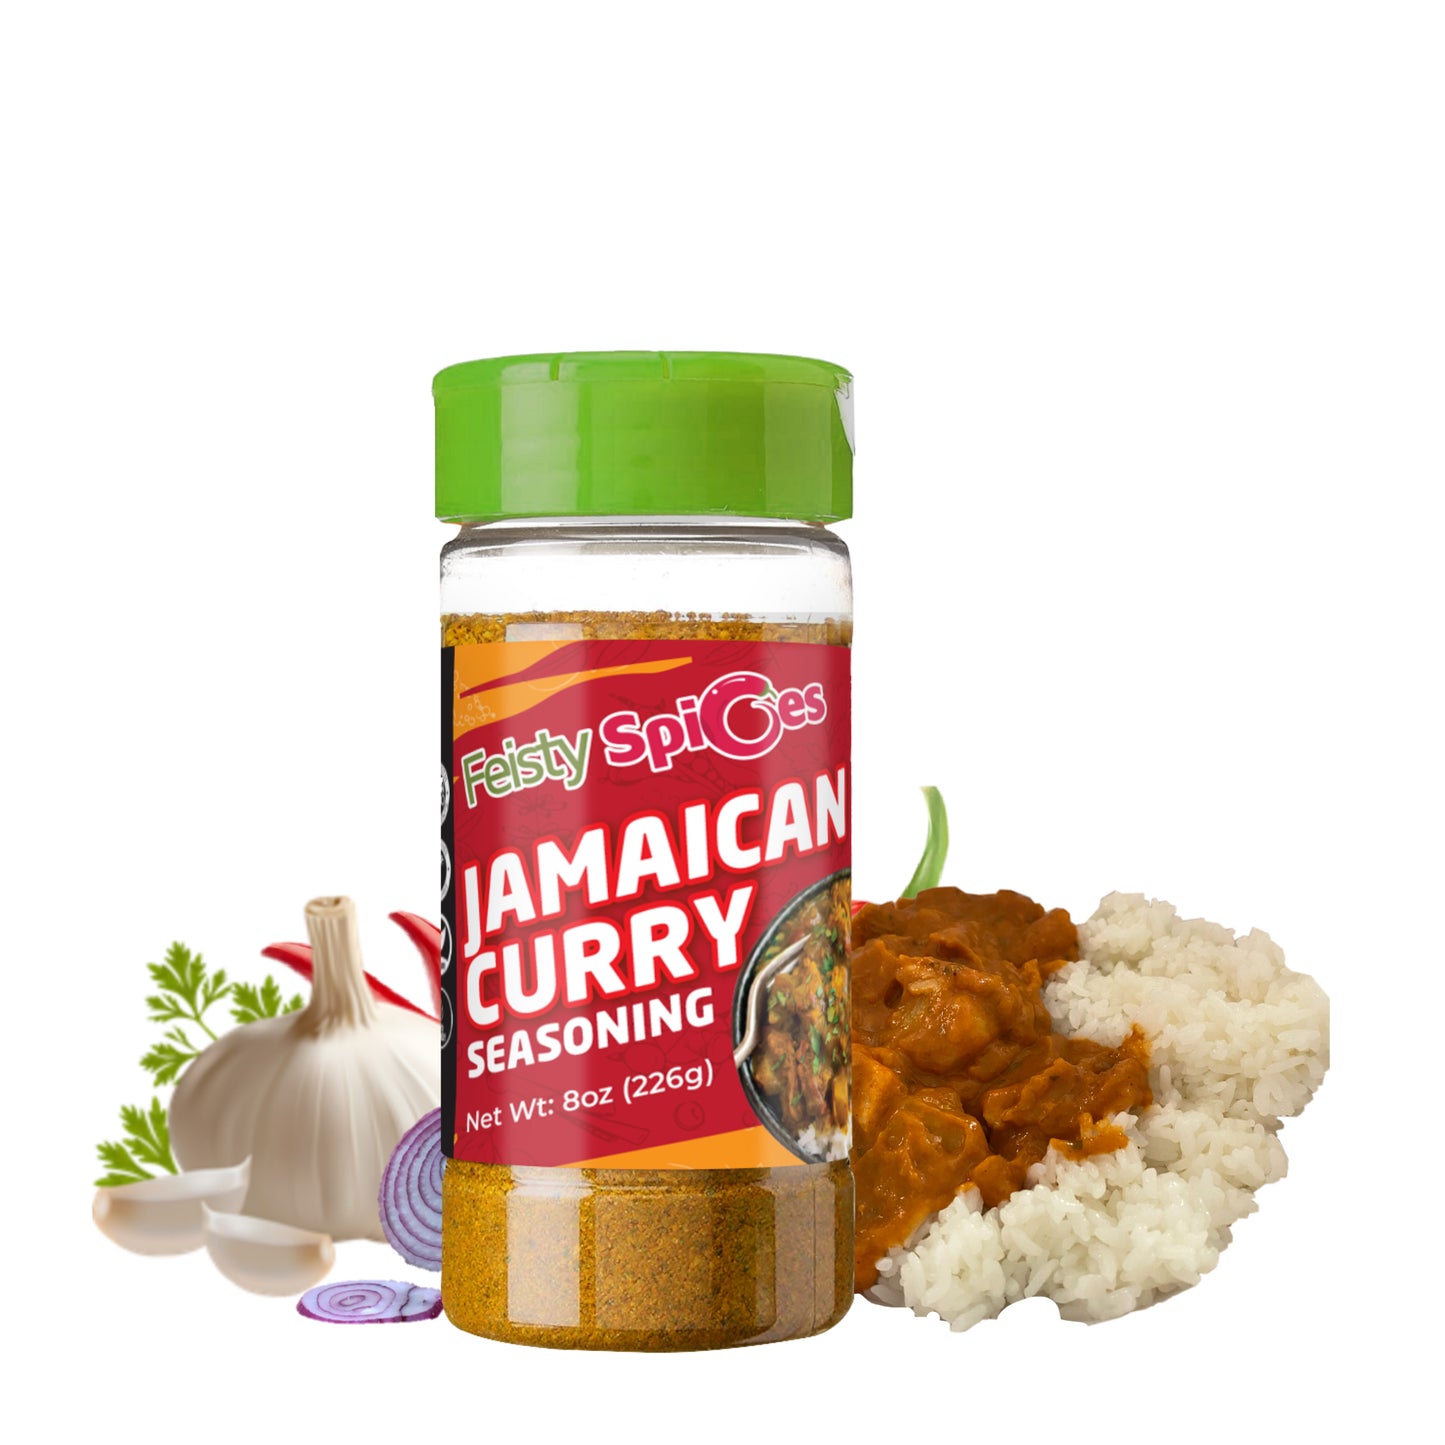 Jamaican Curry Seasoning, 8oz-Caribbean Spice Delight